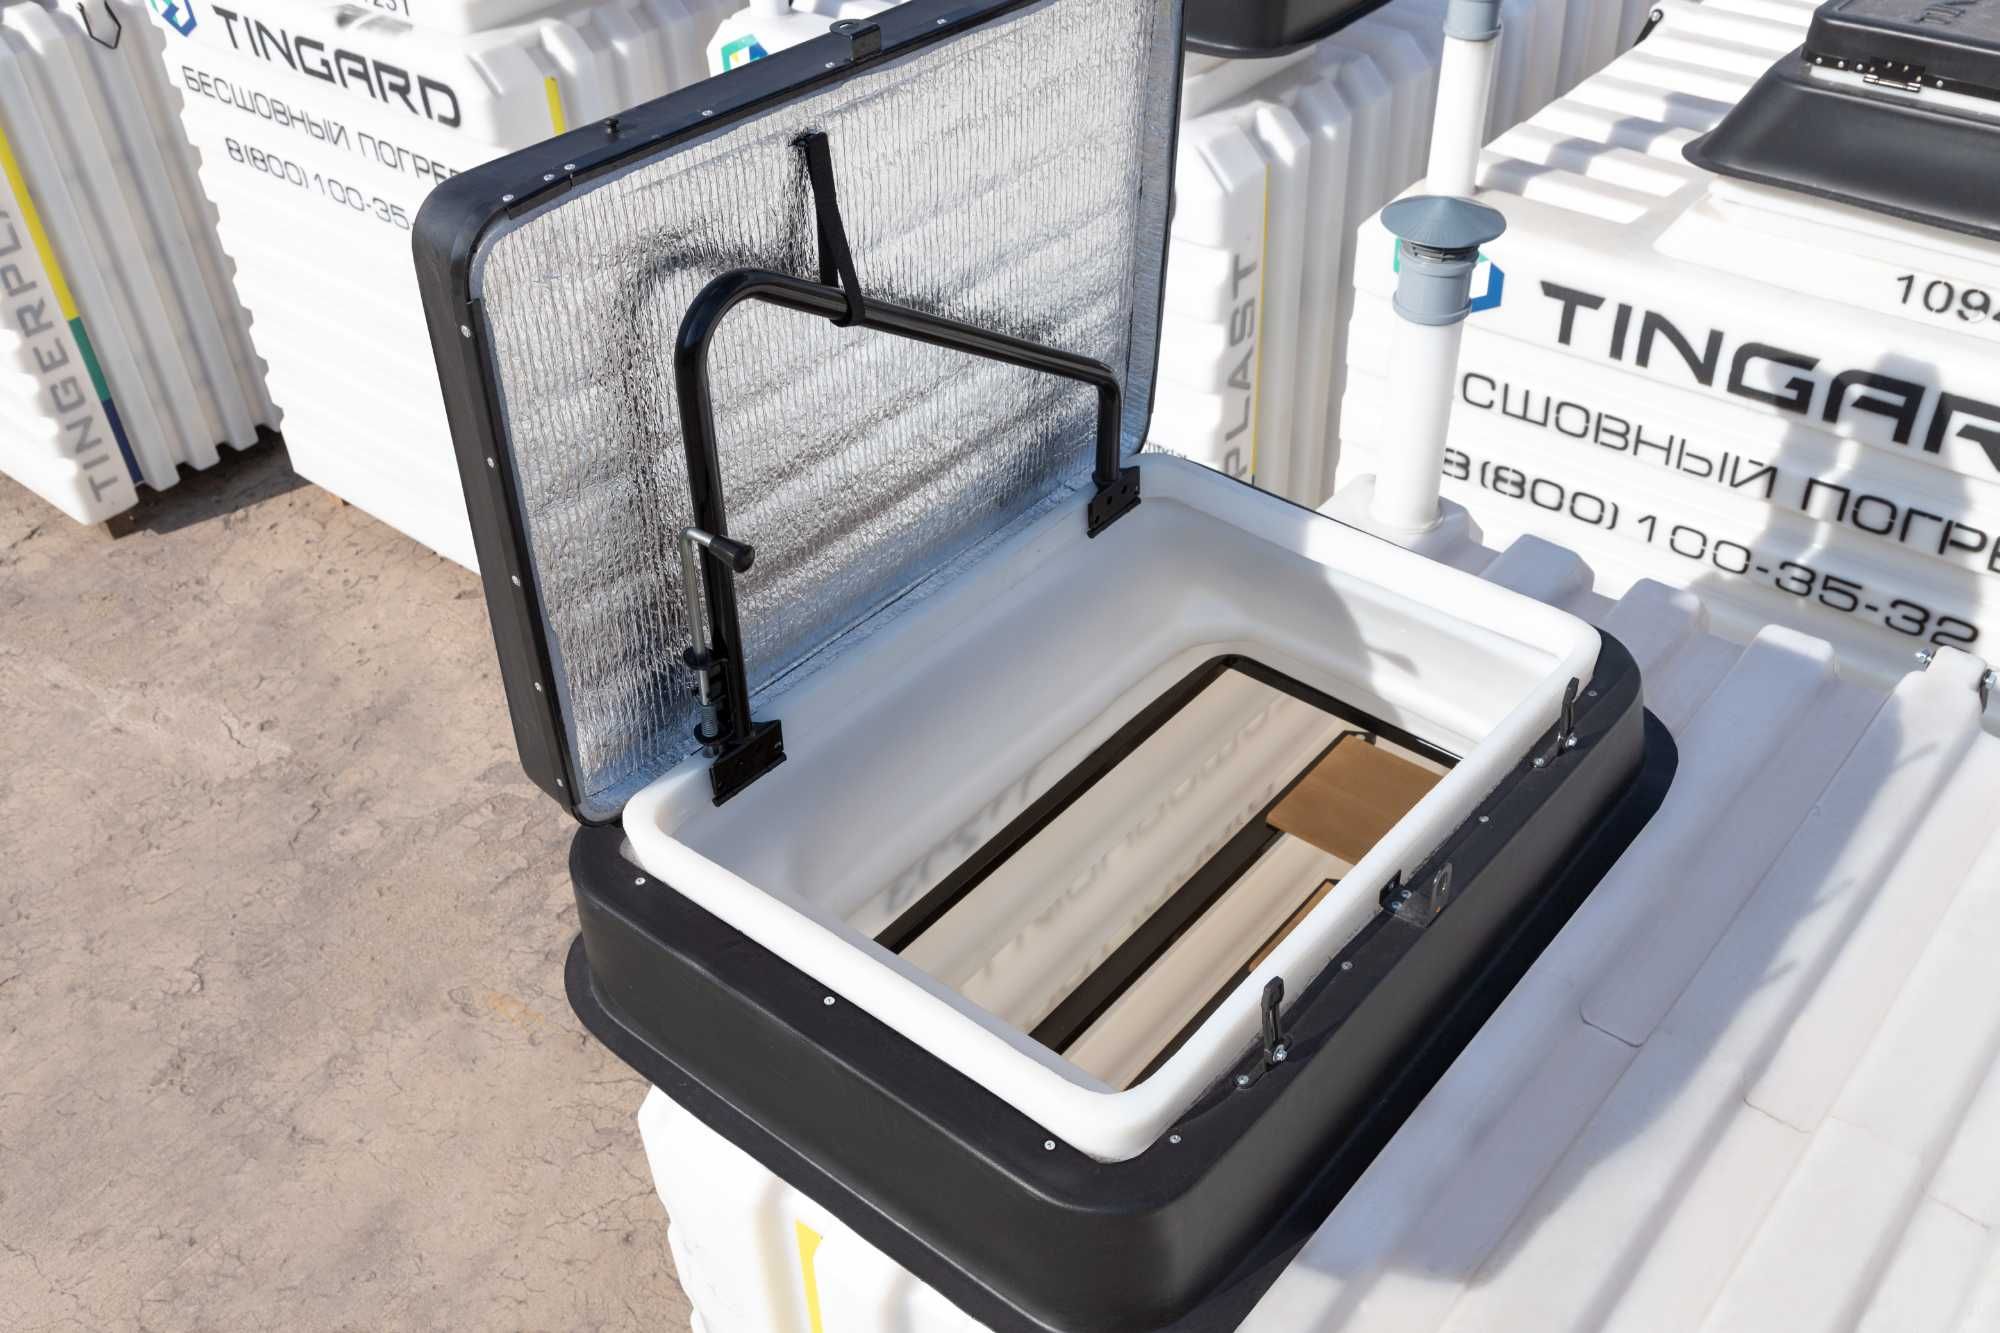 Погреб пластиковый Tingard T1900, для дома, дачи, кафе